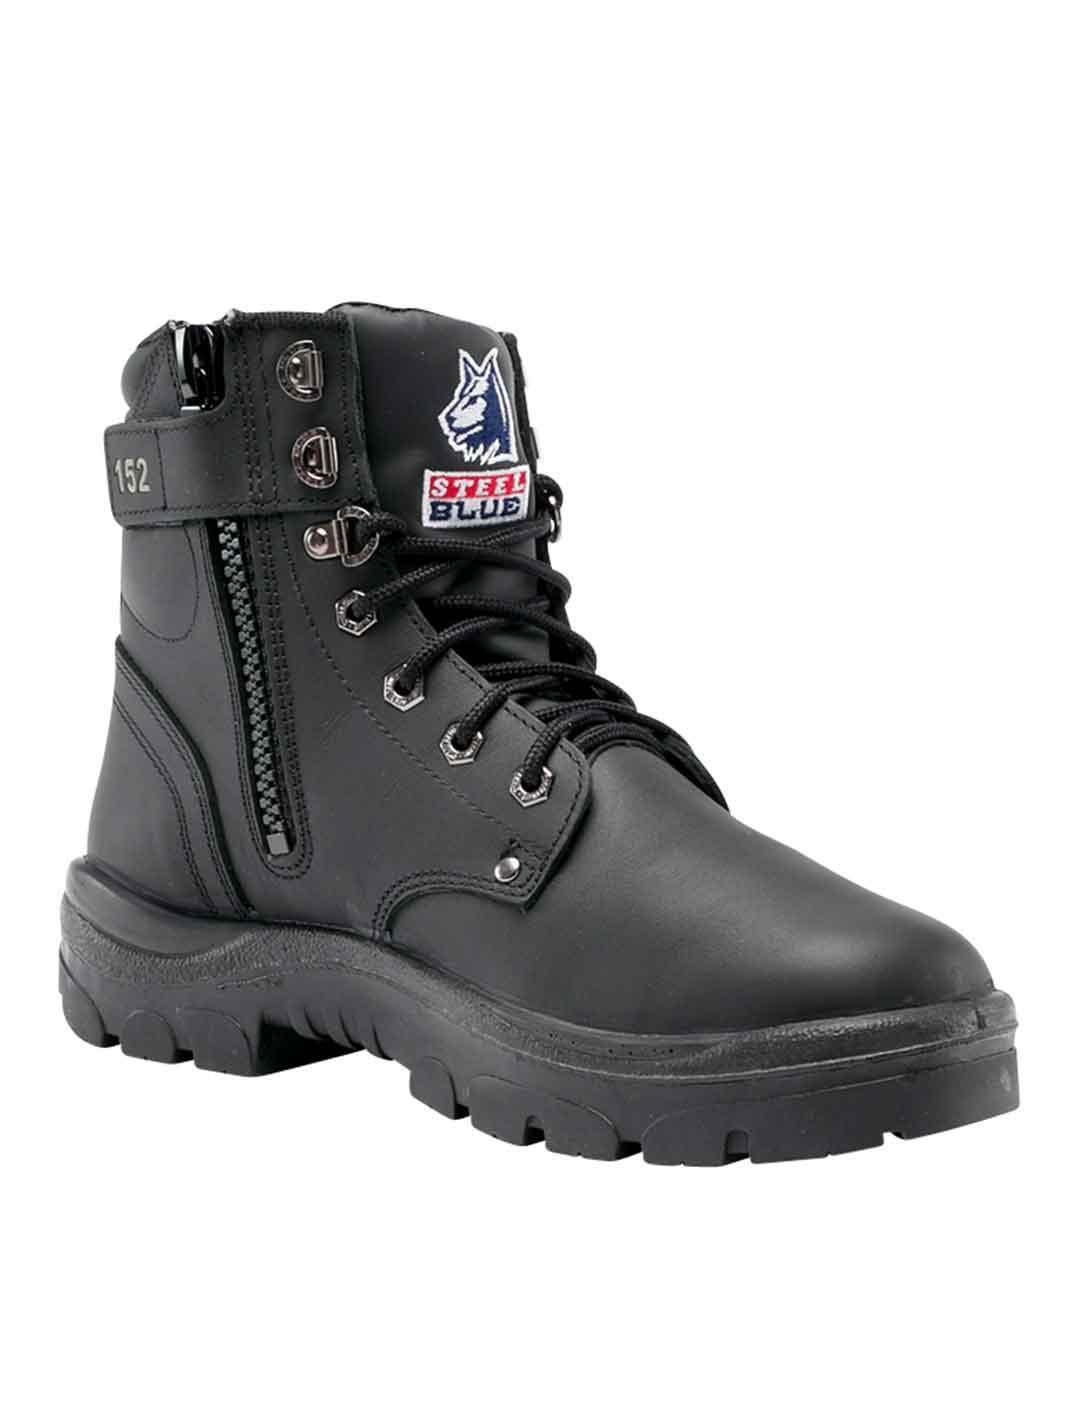 Footwear - Steel Blue Argyle Zip Safety Steel Cap Boots